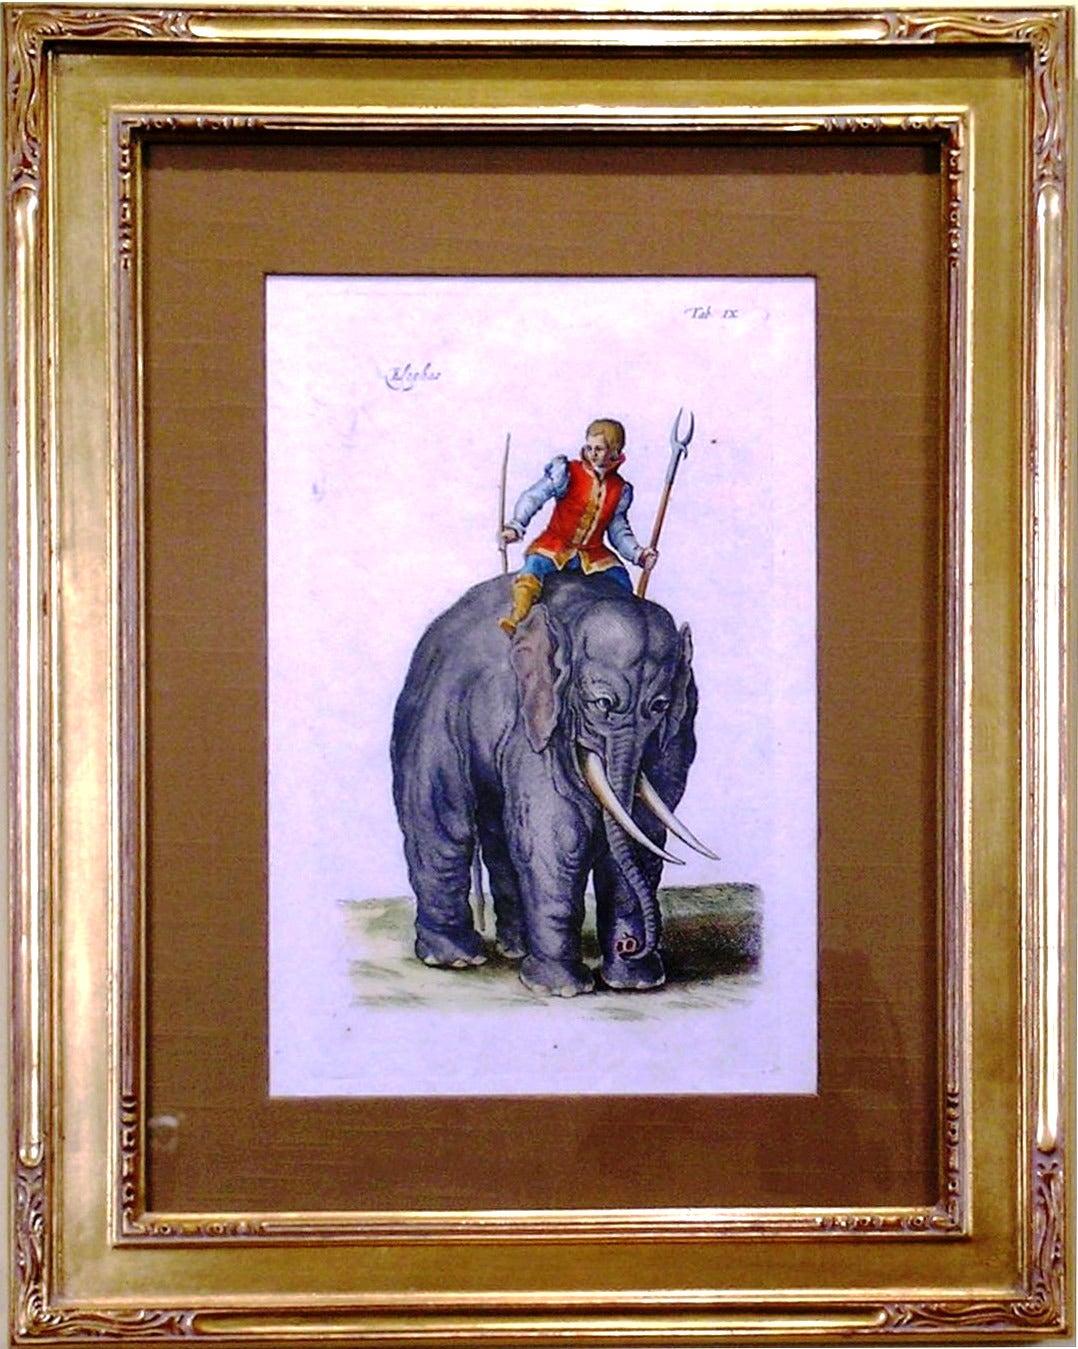 Elephas Tab. IX (Indian Elephant) - Print by Matthäus Merian the Younger